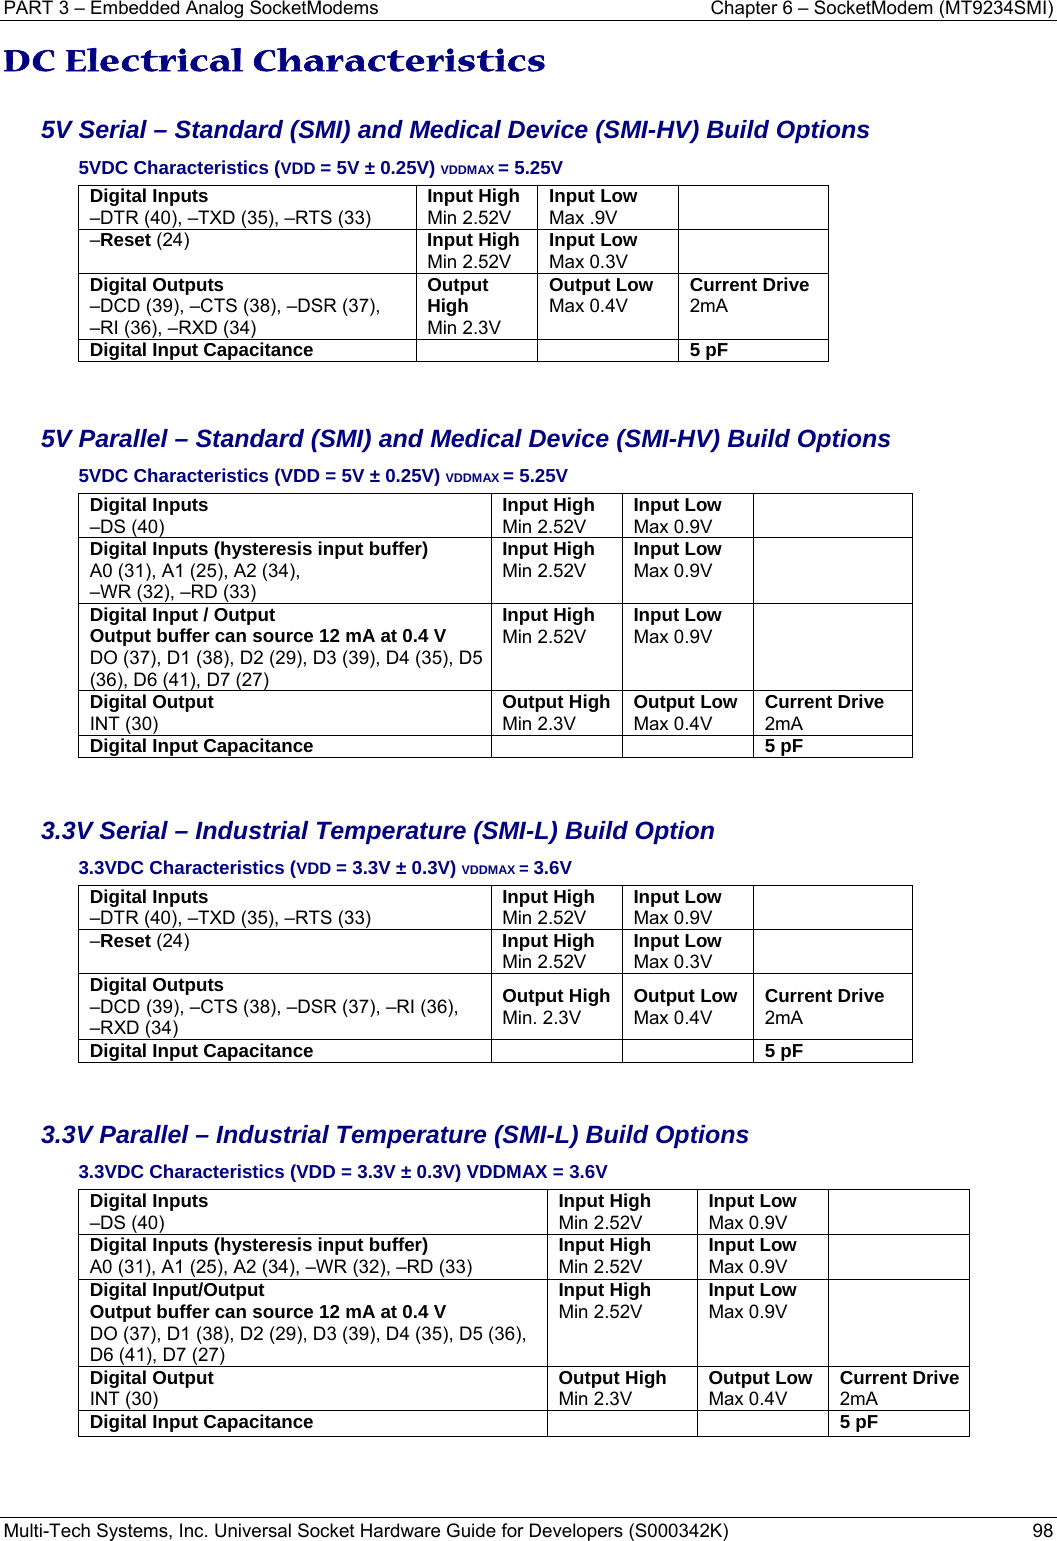 PART 3 – Embedded Analog SocketModems  Chapter 6 – SocketModem (MT9234SMI) Multi-Tech Systems, Inc. Universal Socket Hardware Guide for Developers (S000342K)  98  DC Electrical Characteristics  5V Serial – Standard (SMI) and Medical Device (SMI-HV) Build Options 5VDC Characteristics (VDD = 5V ± 0.25V) VDDMAX = 5.25V  Digital Inputs –DTR (40), –TXD (35), –RTS (33) Input High Min 2.52V Input LowMax .9V –Reset (24) Input HighMin 2.52V Input LowMax 0.3V Digital Outputs –DCD (39), –CTS (38), –DSR (37),  –RI (36), –RXD (34) Output High Min 2.3V Output LowMax 0.4V Current Drive 2mA Digital Input Capacitance  5 pF  5V Parallel – Standard (SMI) and Medical Device (SMI-HV) Build Options 5VDC Characteristics (VDD = 5V ± 0.25V) VDDMAX = 5.25V Digital Inputs –DS (40) Input HighMin 2.52V Input LowMax 0.9V Digital Inputs (hysteresis input buffer)A0 (31), A1 (25), A2 (34),  –WR (32), –RD (33) Input HighMin 2.52V Input LowMax 0.9V Digital Input / Output Output buffer can source 12 mA at 0.4 V DO (37), D1 (38), D2 (29), D3 (39), D4 (35), D5 (36), D6 (41), D7 (27) Input HighMin 2.52V Input LowMax 0.9V Digital Output INT (30) Output HighMin 2.3V Output LowMax 0.4V Current Drive 2mA Digital Input Capacitance  5 pF   3.3V Serial – Industrial Temperature (SMI-L) Build Option 3.3VDC Characteristics (VDD = 3.3V ± 0.3V) VDDMAX = 3.6V   Digital Inputs –DTR (40), –TXD (35), –RTS (33) Input HighMin 2.52VInput LowMax 0.9V  –Reset (24) Input HighMin 2.52V Input LowMax 0.3V Digital Outputs –DCD (39), –CTS (38), –DSR (37), –RI (36),  –RXD (34) Output High Min. 2.3V Output Low Max 0.4V Current Drive 2mA Digital Input Capacitance    5 pF   3.3V Parallel – Industrial Temperature (SMI-L) Build Options 3.3VDC Characteristics (VDD = 3.3V ± 0.3V) VDDMAX = 3.6V Digital Inputs –DS (40) Input HighMin 2.52VInput Low Max 0.9V  Digital Inputs (hysteresis input buffer)A0 (31), A1 (25), A2 (34), –WR (32), –RD (33) Input HighMin 2.52V Input Low Max 0.9V  Digital Input/Output  Output buffer can source 12 mA at 0.4 V DO (37), D1 (38), D2 (29), D3 (39), D4 (35), D5 (36),  D6 (41), D7 (27) Input High Min 2.52V Input Low Max 0.9V  Digital Output INT (30) Output HighMin 2.3V Output Low Max 0.4V Current Drive2mA Digital Input Capacitance  5 pF    